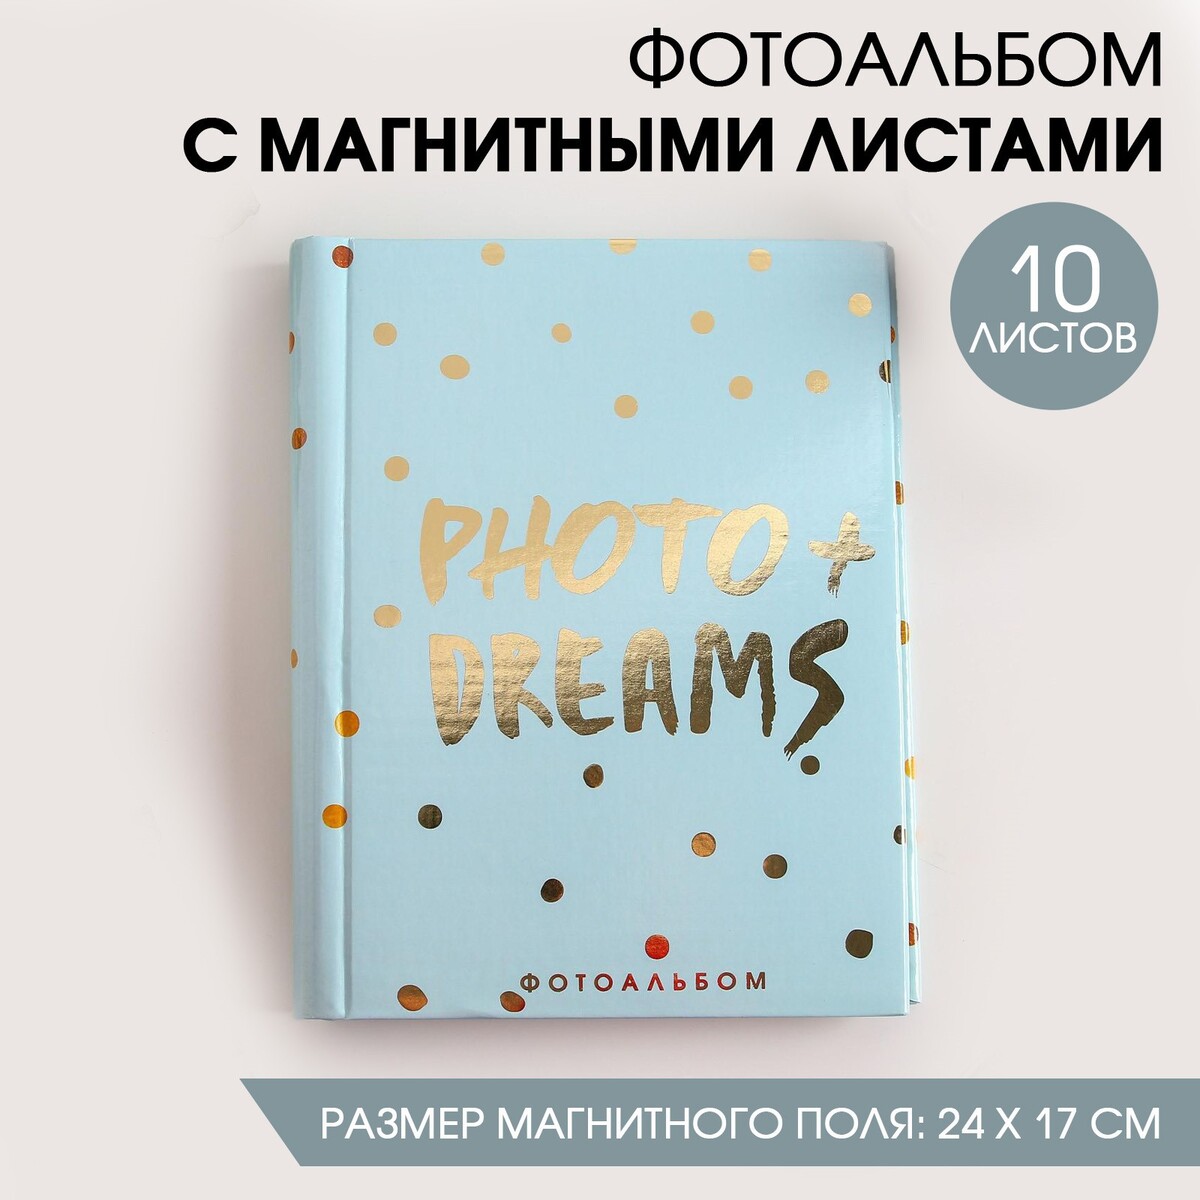 Фотоальбом photo + dreams, 10 магнитных листов the dreams of bethany mellmoth